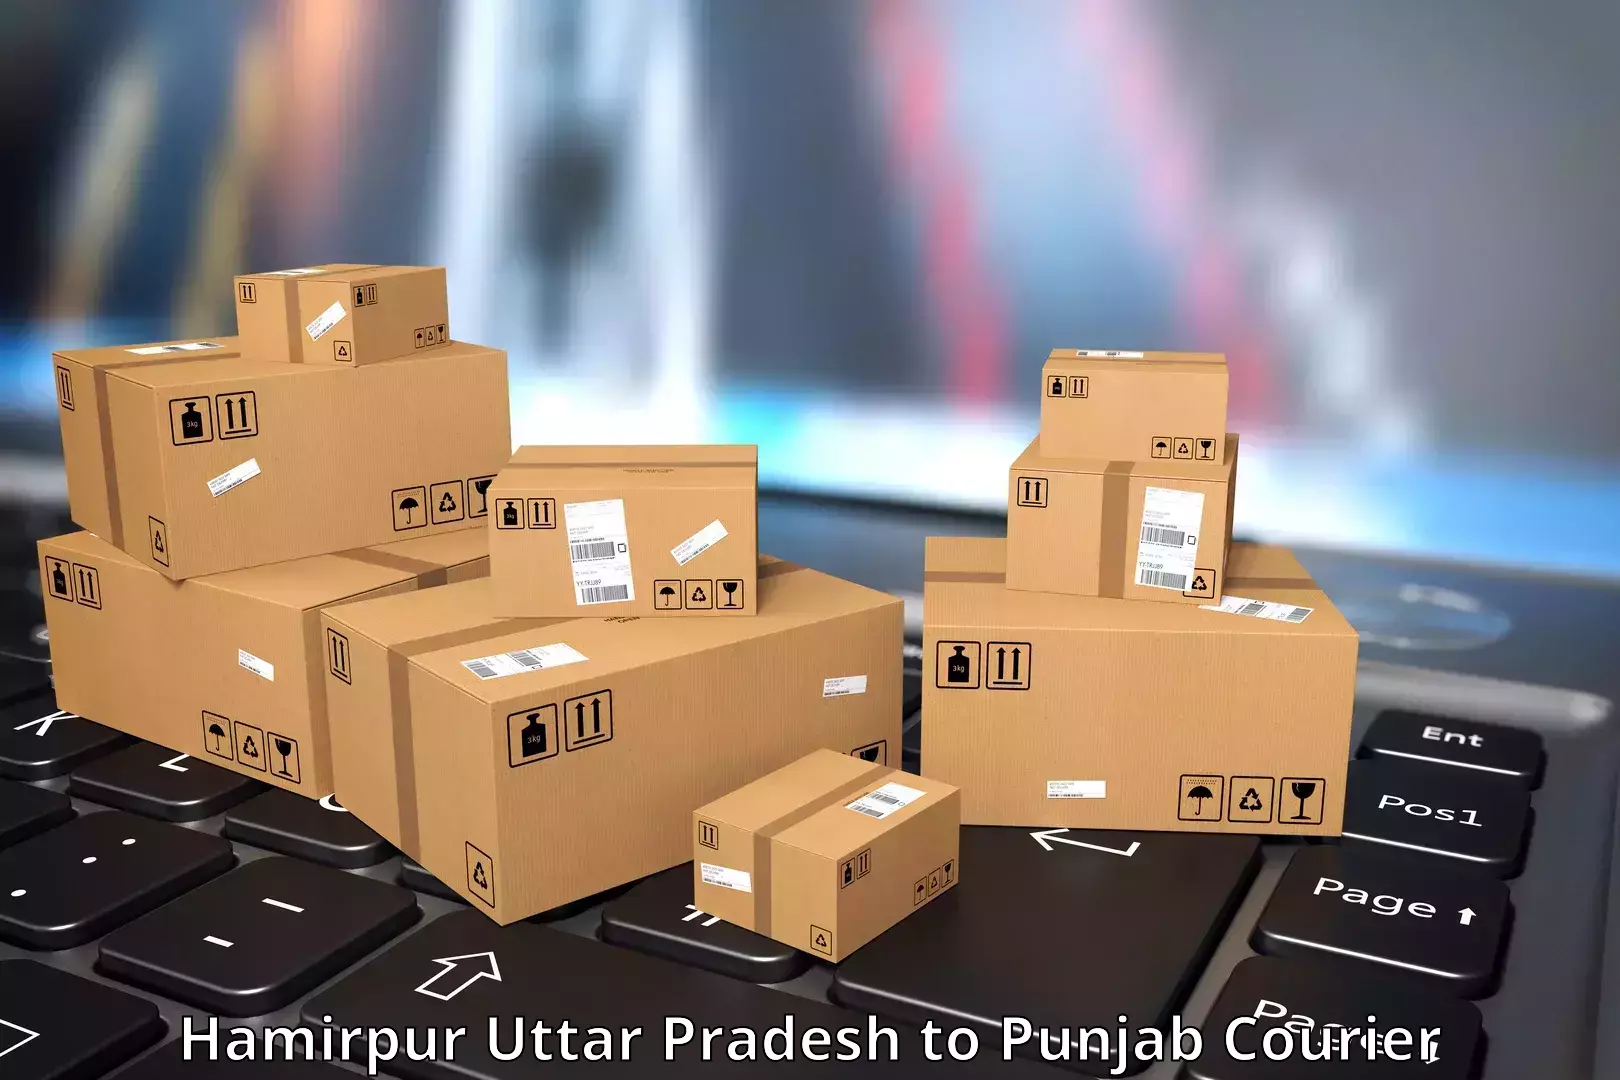 Courier service partnerships Hamirpur Uttar Pradesh to Bathinda